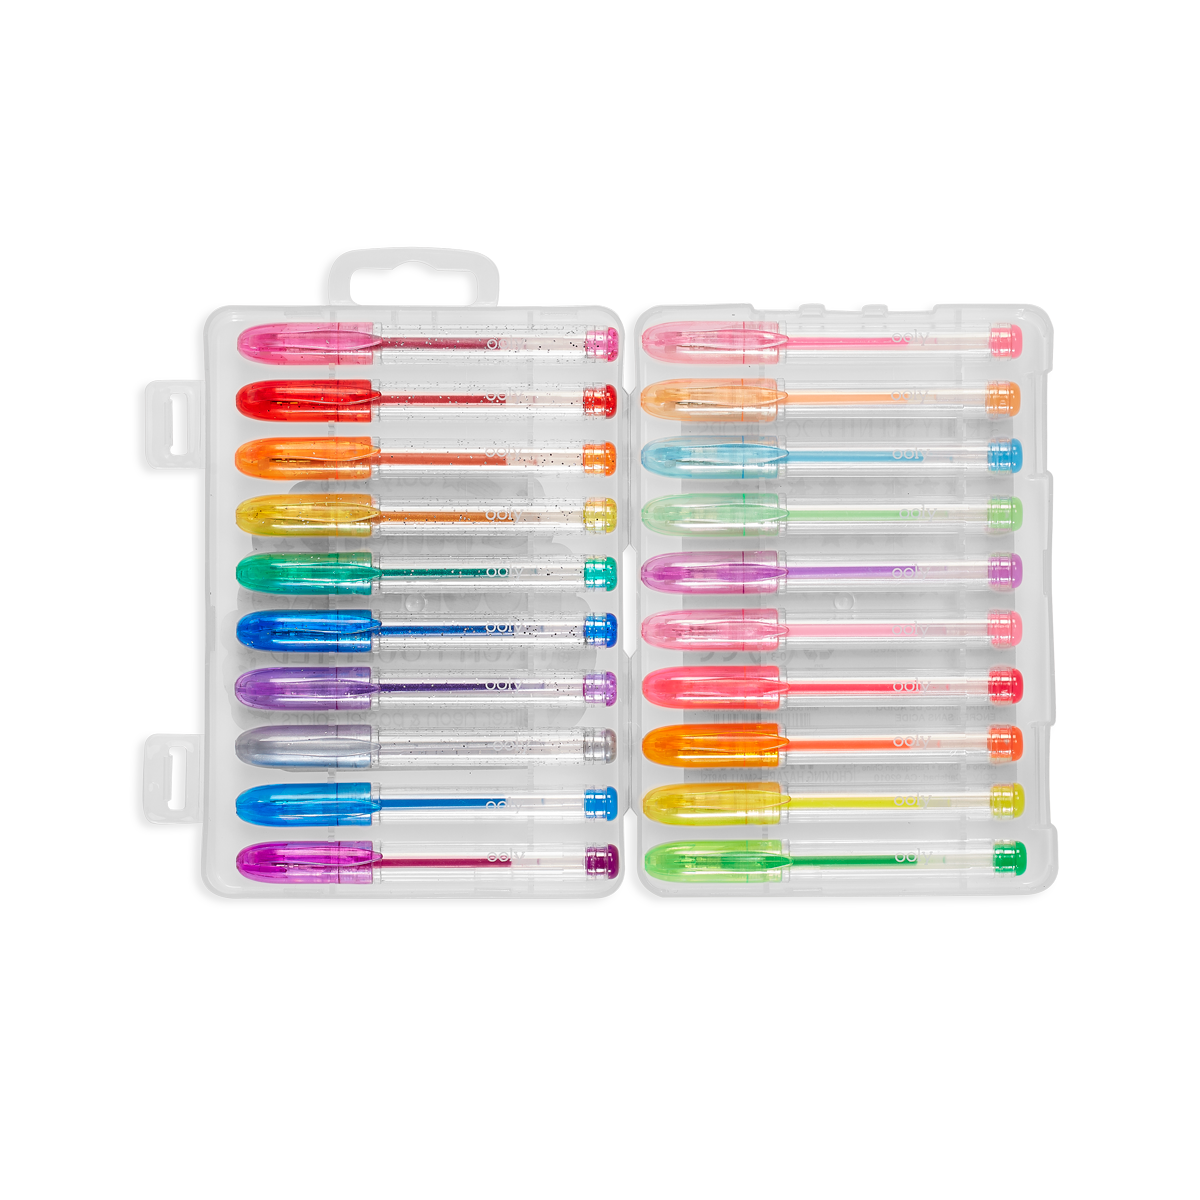 Yoobi Color & Glitter Color Gel Pens-Multicolor-24 Pack